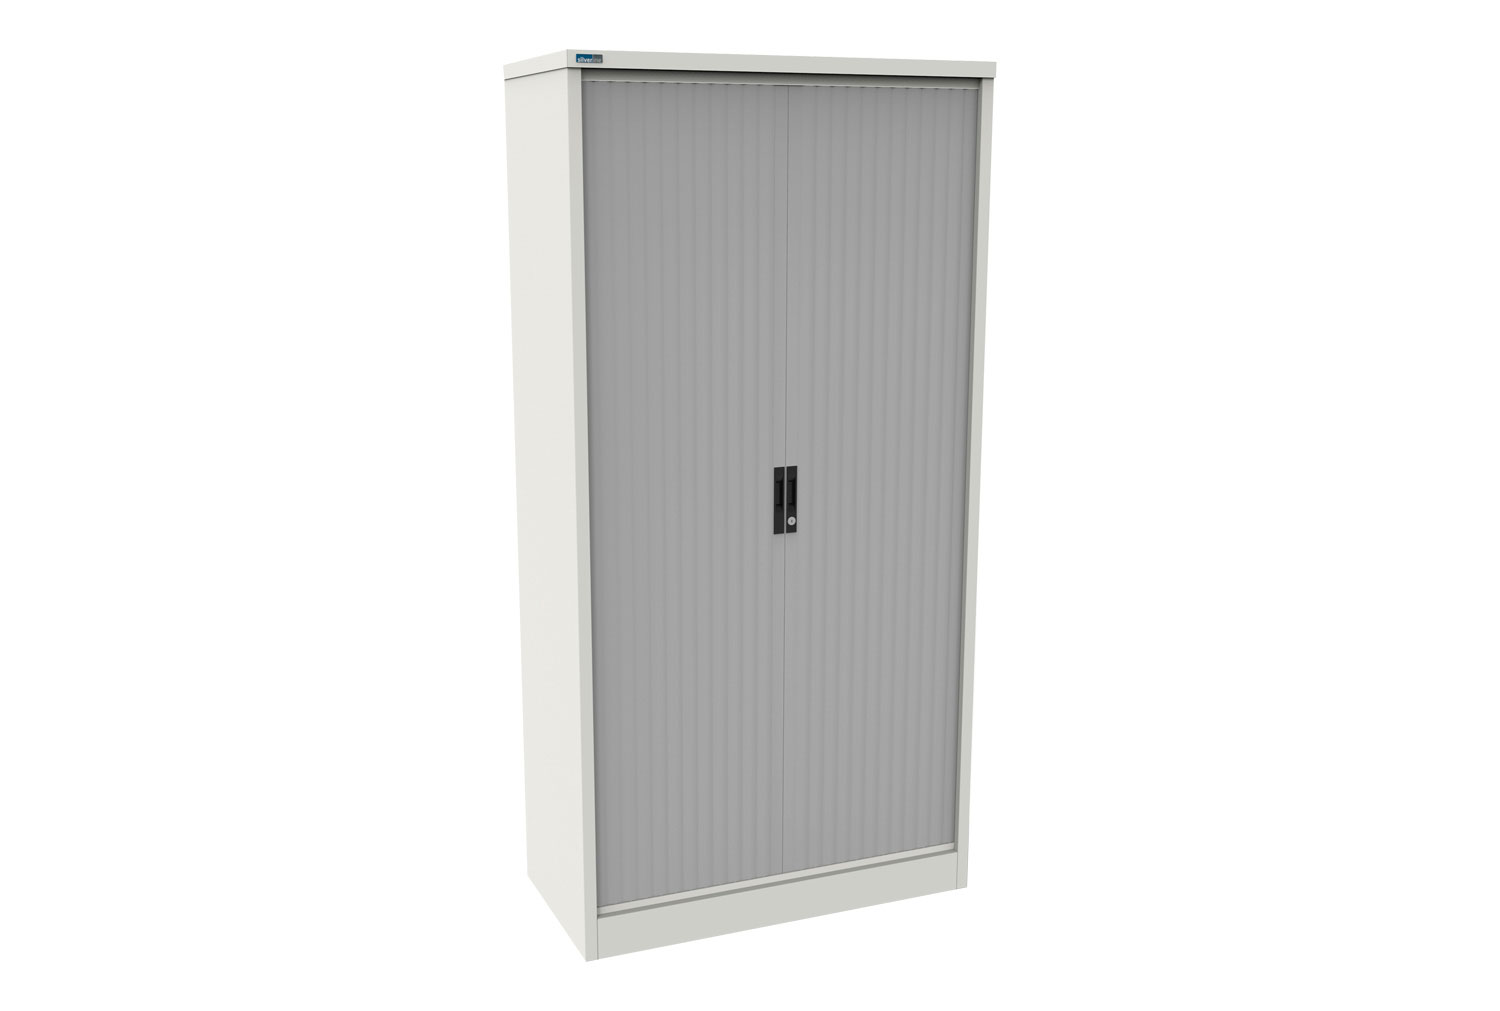 Silverline Kontrax Side Tambour Door Office Cupboards 100cm Wide, 100wx51dx200h (cm), Traffic White Body, White